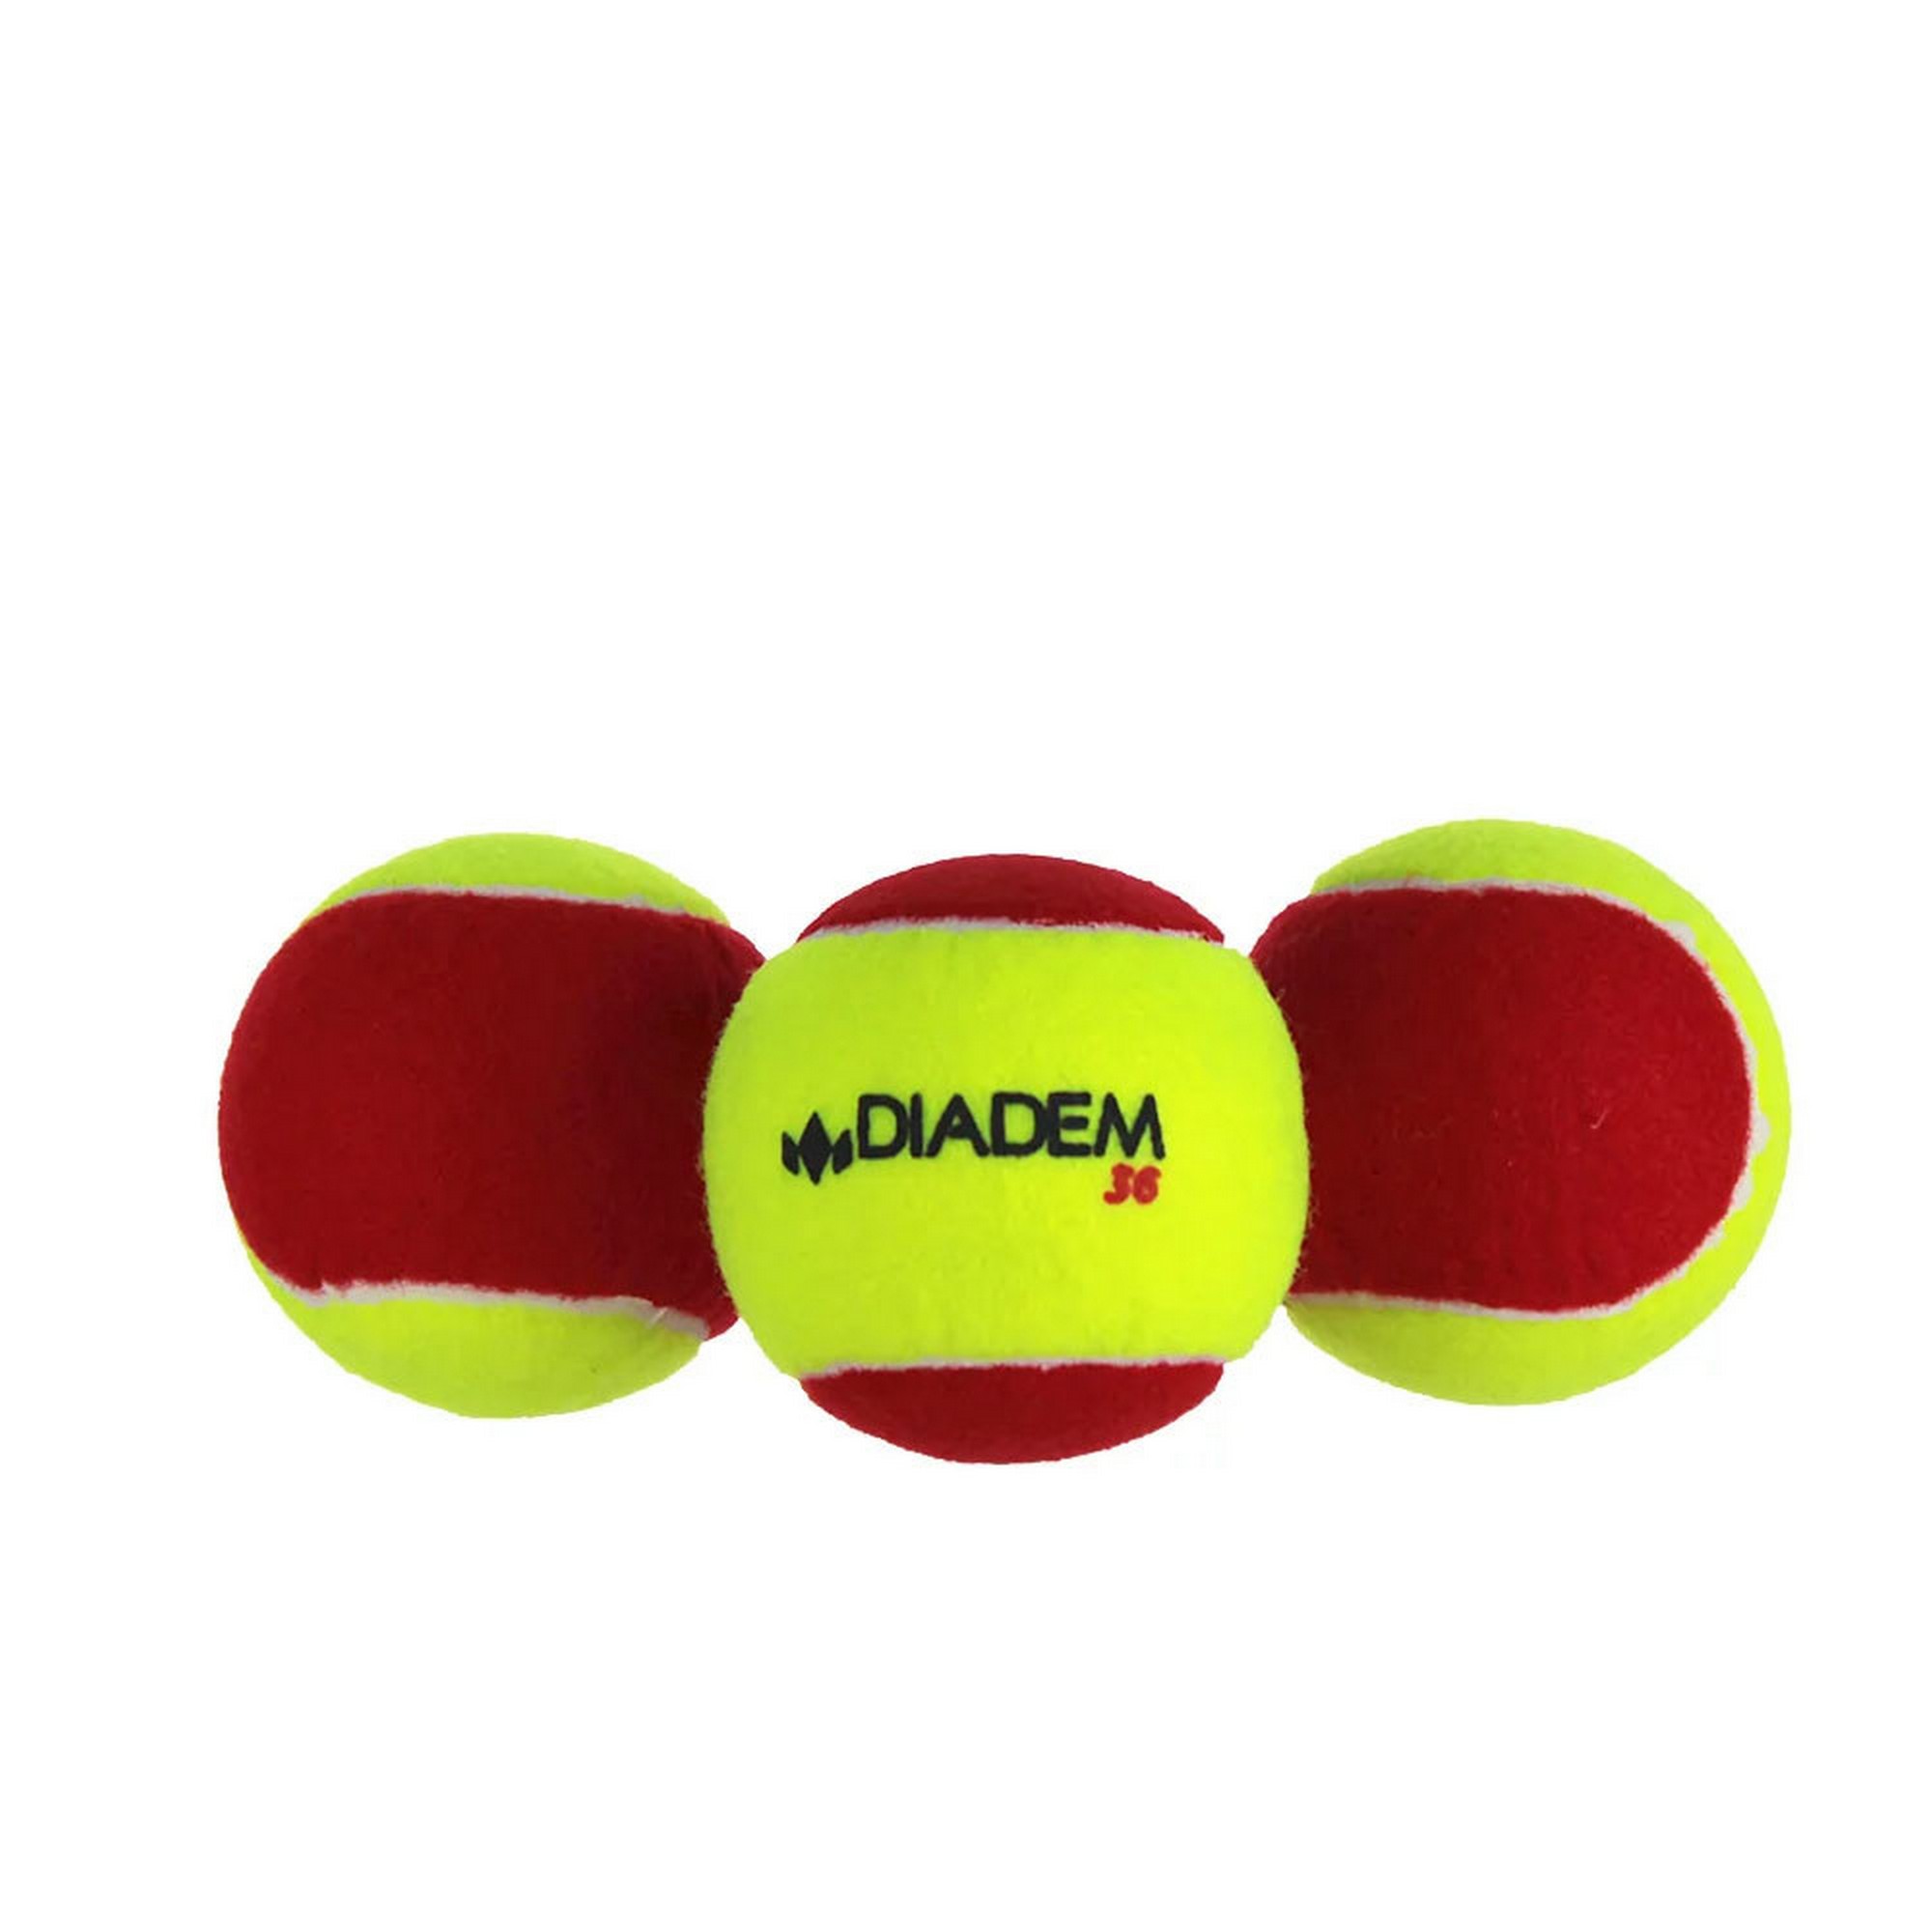 Мяч теннисный детский Diadem Stage 3 Red Ball 3шт, фетр BALL-CASE-RED желто-красный 2000_2000